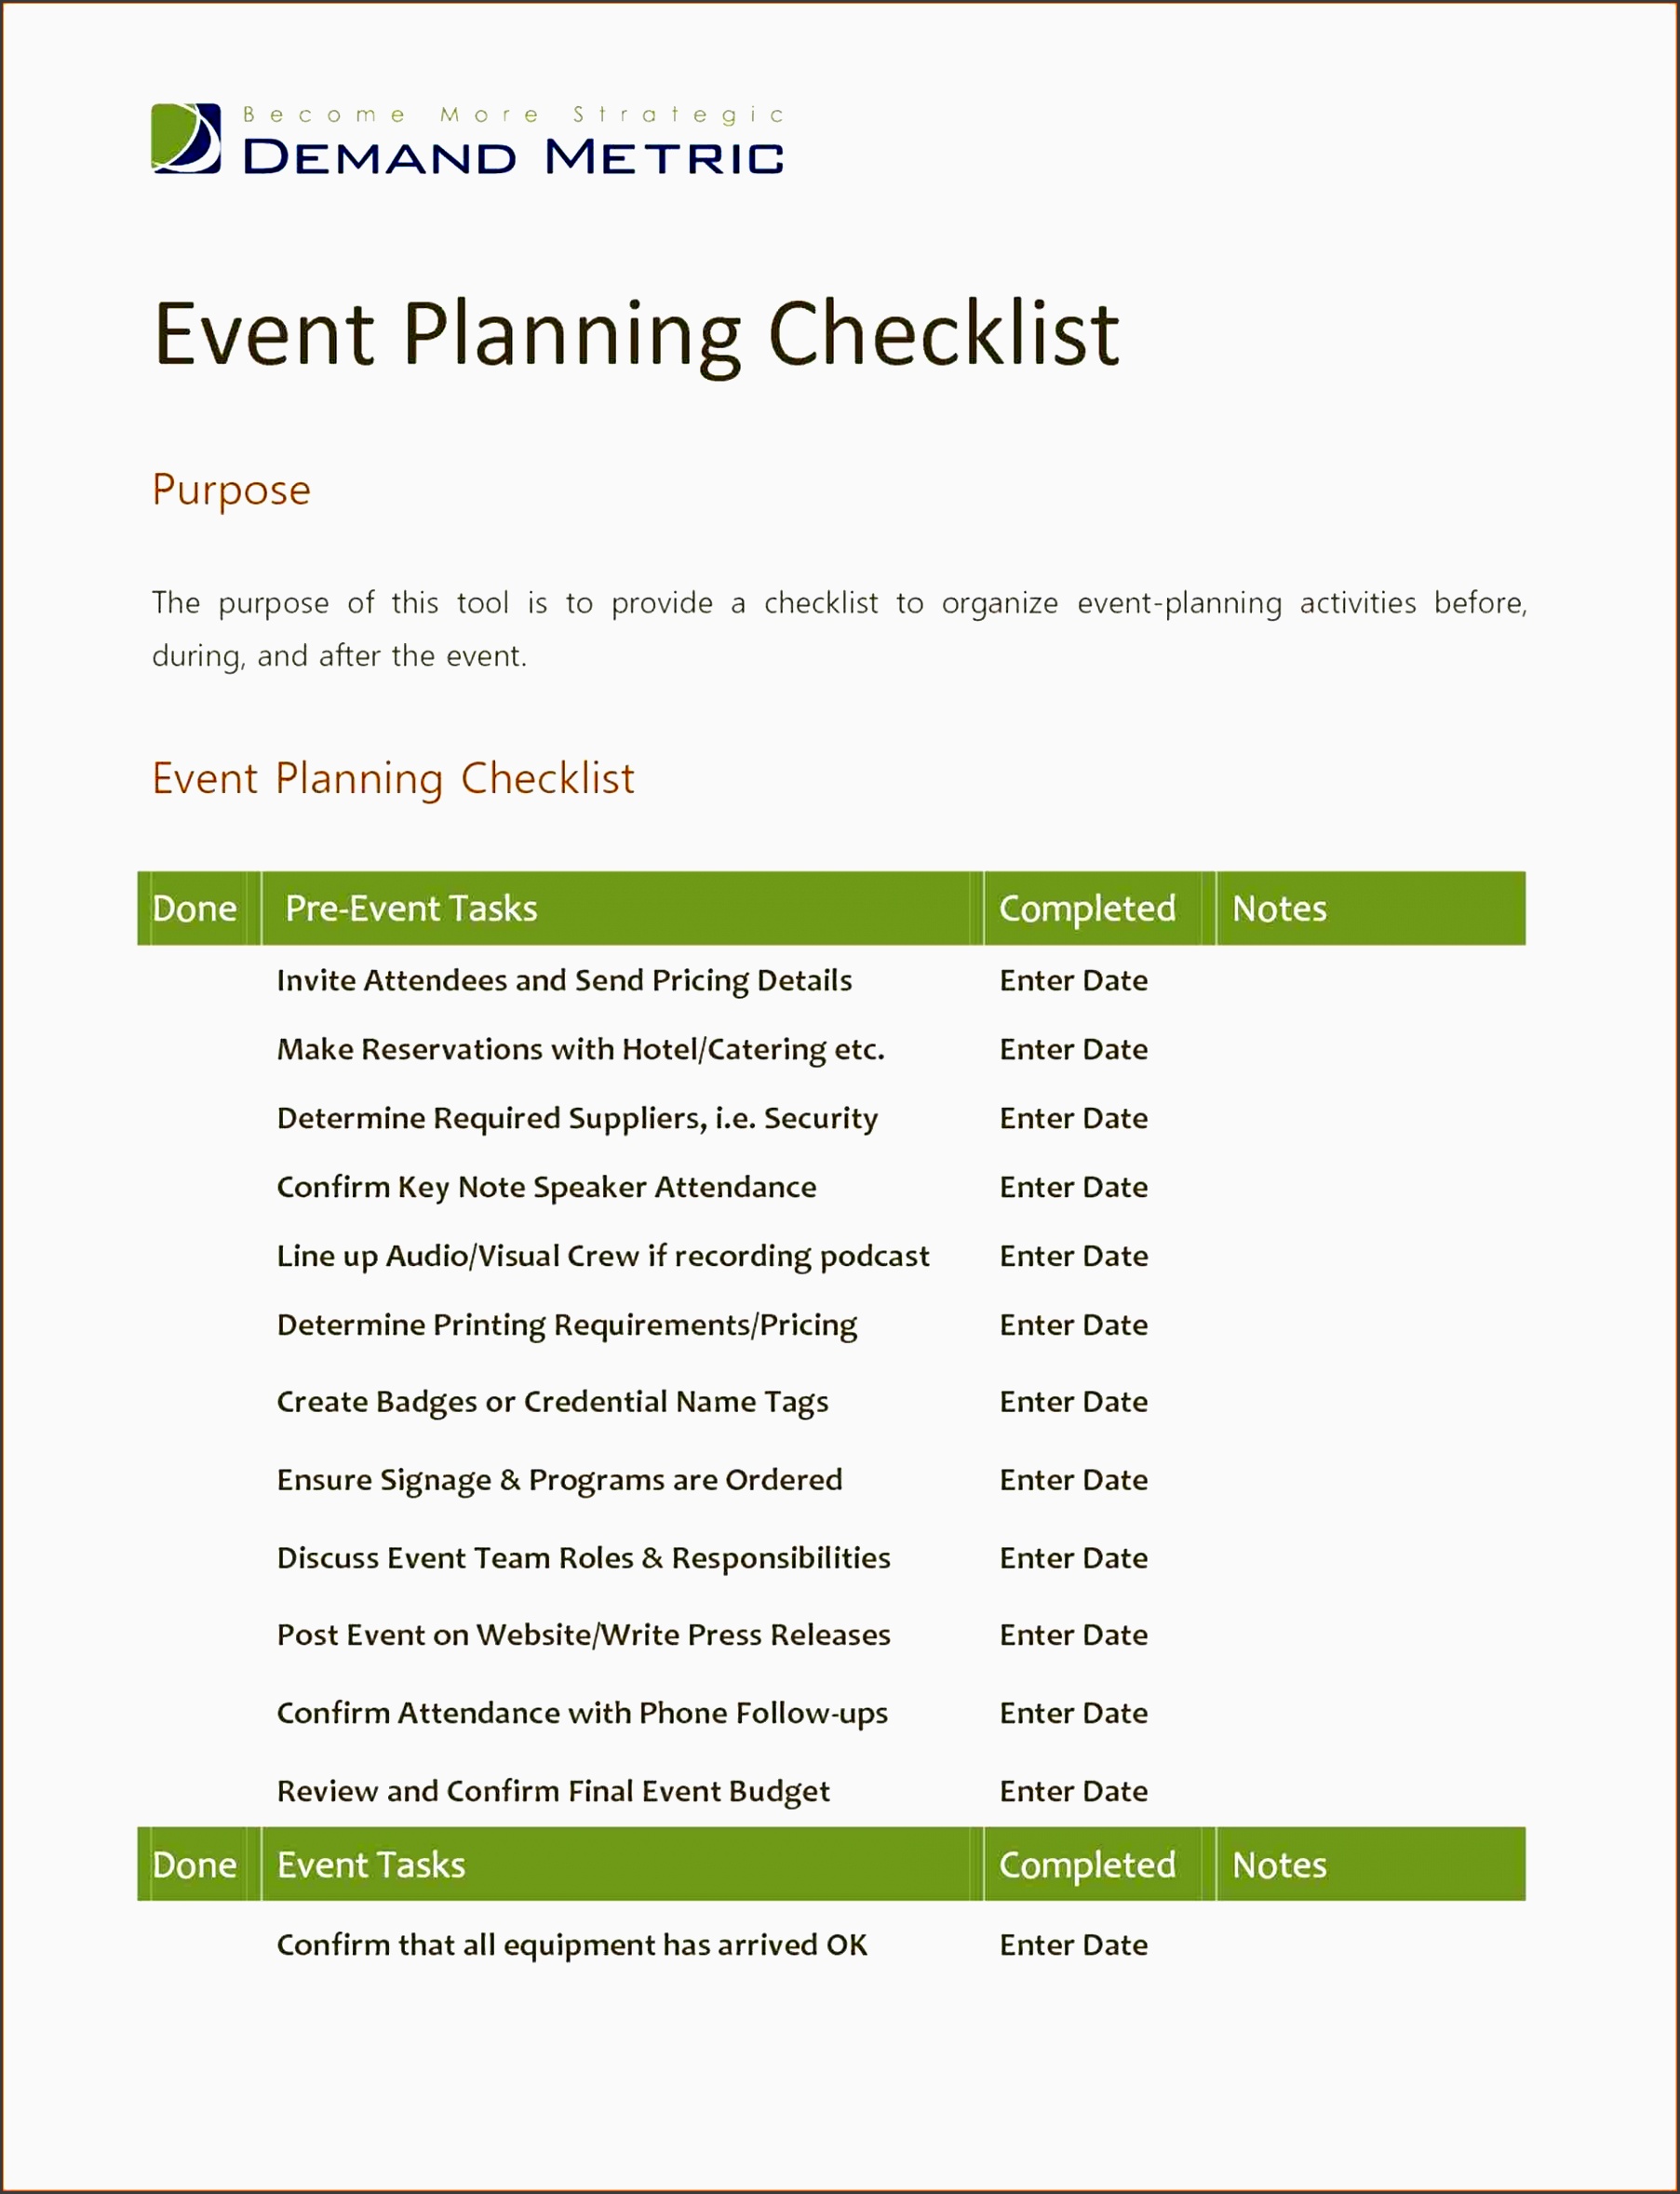 7 Church event Planning Checklist Template SampleTemplatess